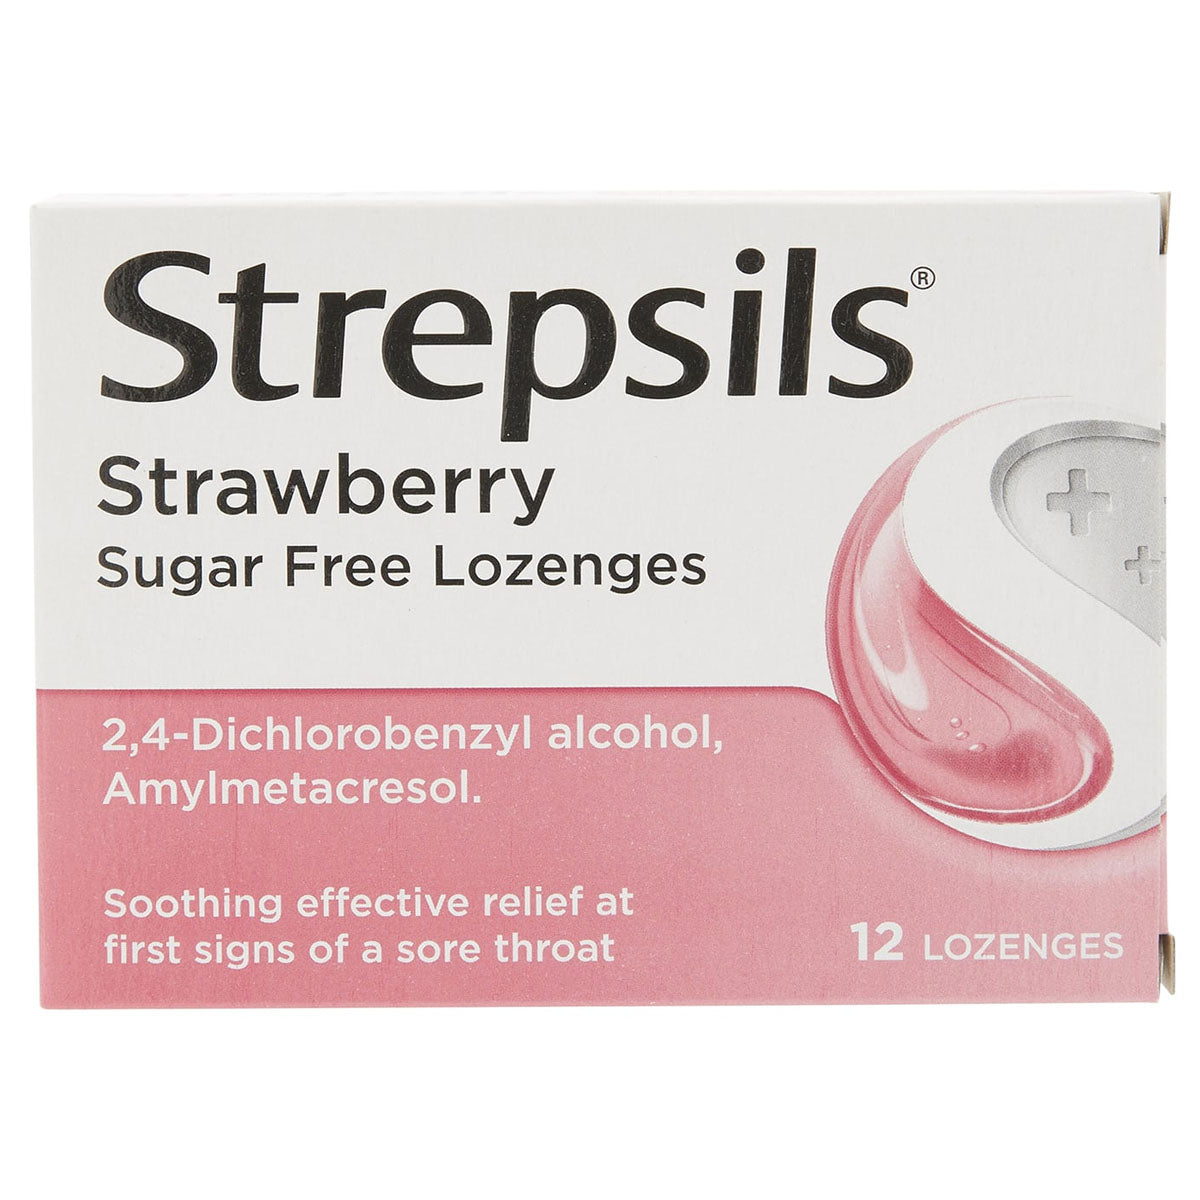 A box of Strepsils - Strawberry Sugar Free Lozenges - 12pcs.